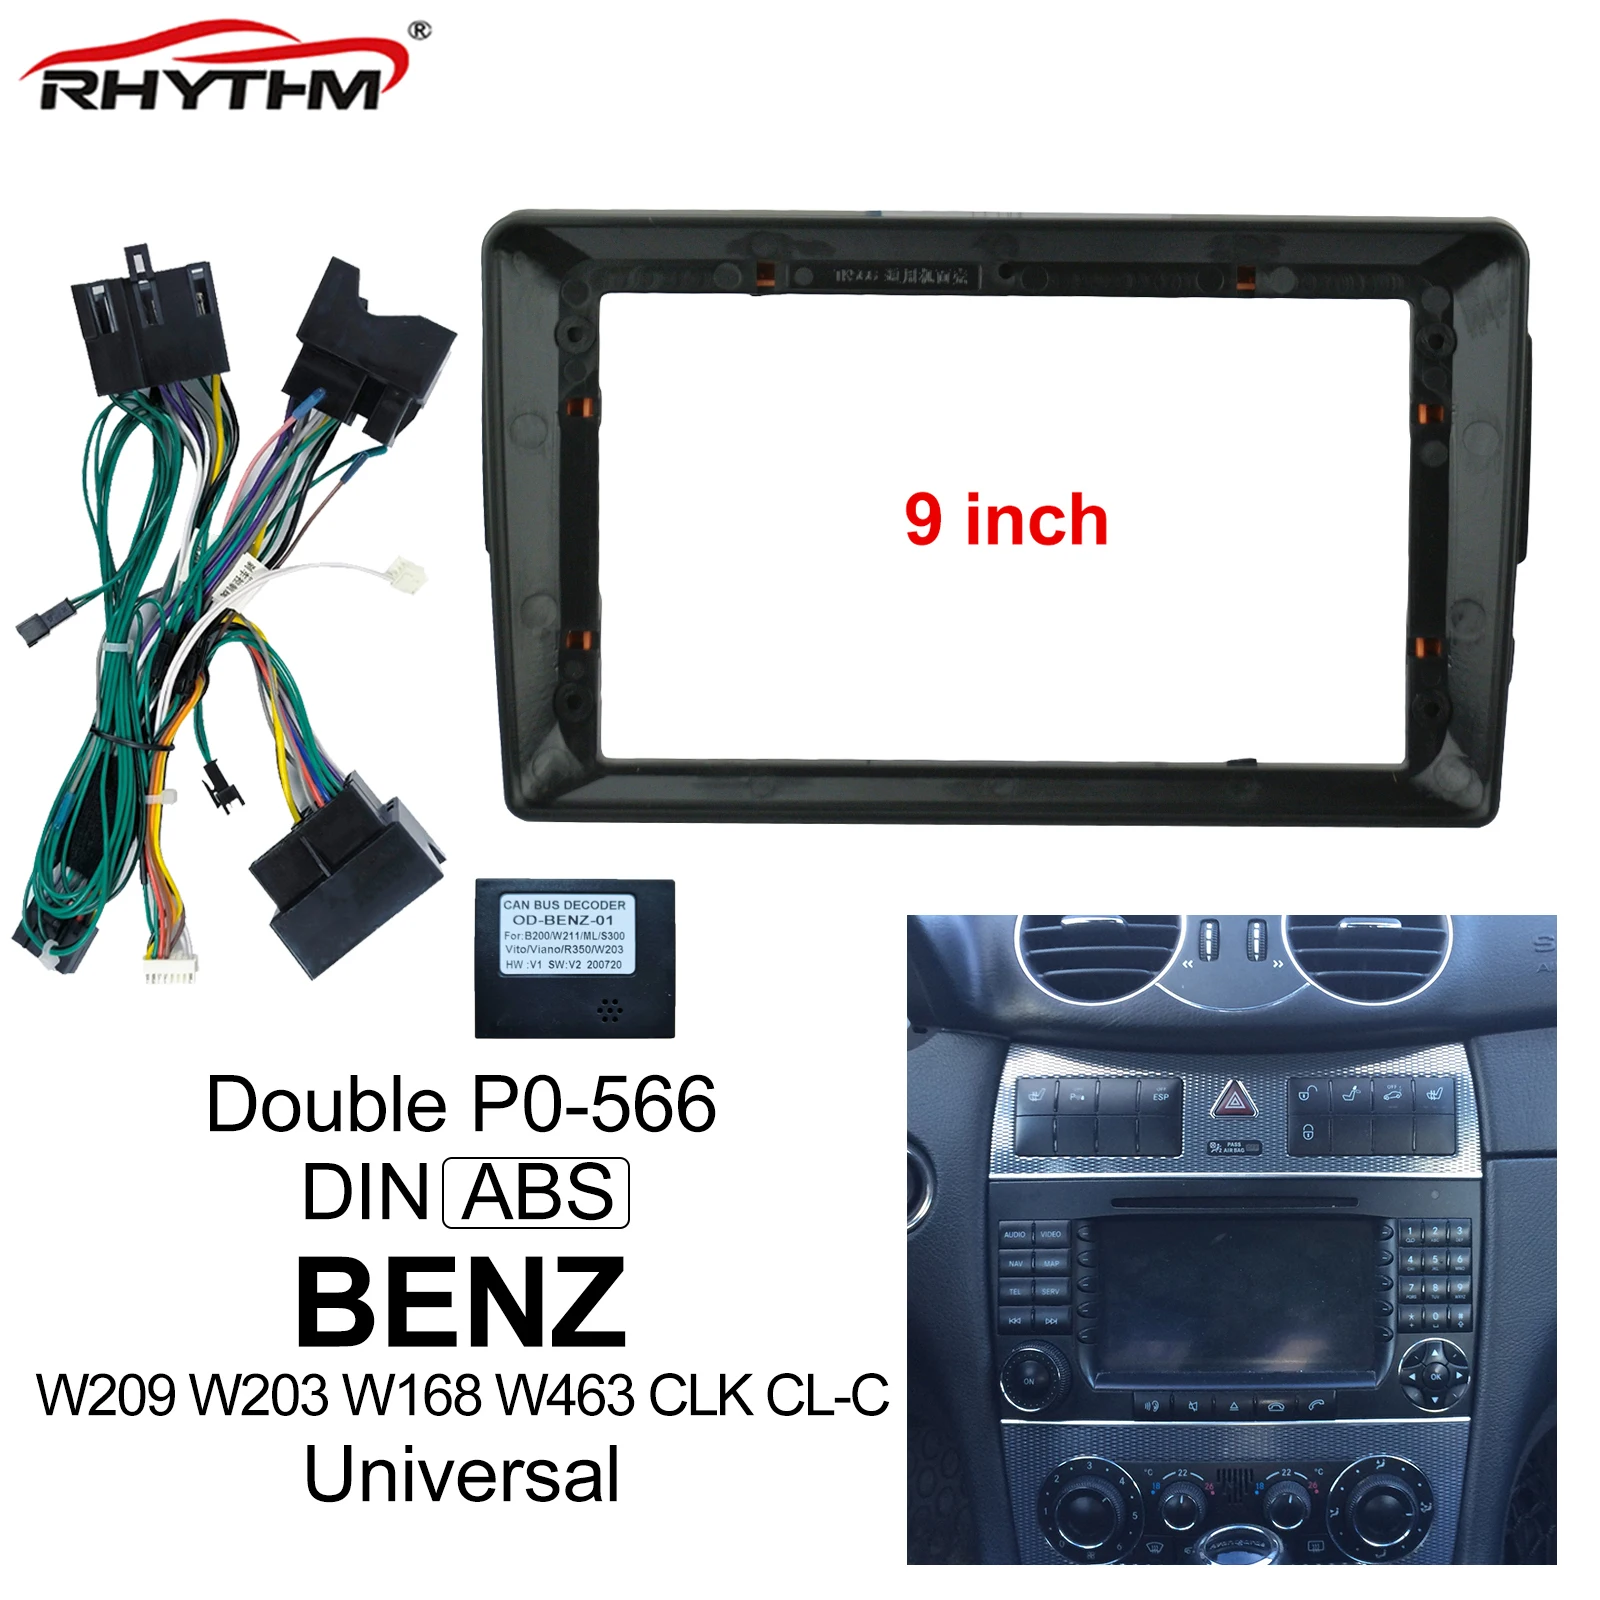 9 Inch Car Fascias for Universal Benz W209 W203 W168 W463 CLK CL-C Car Radio Frame Canbus Cable Audio Dashboard Accessory Tools